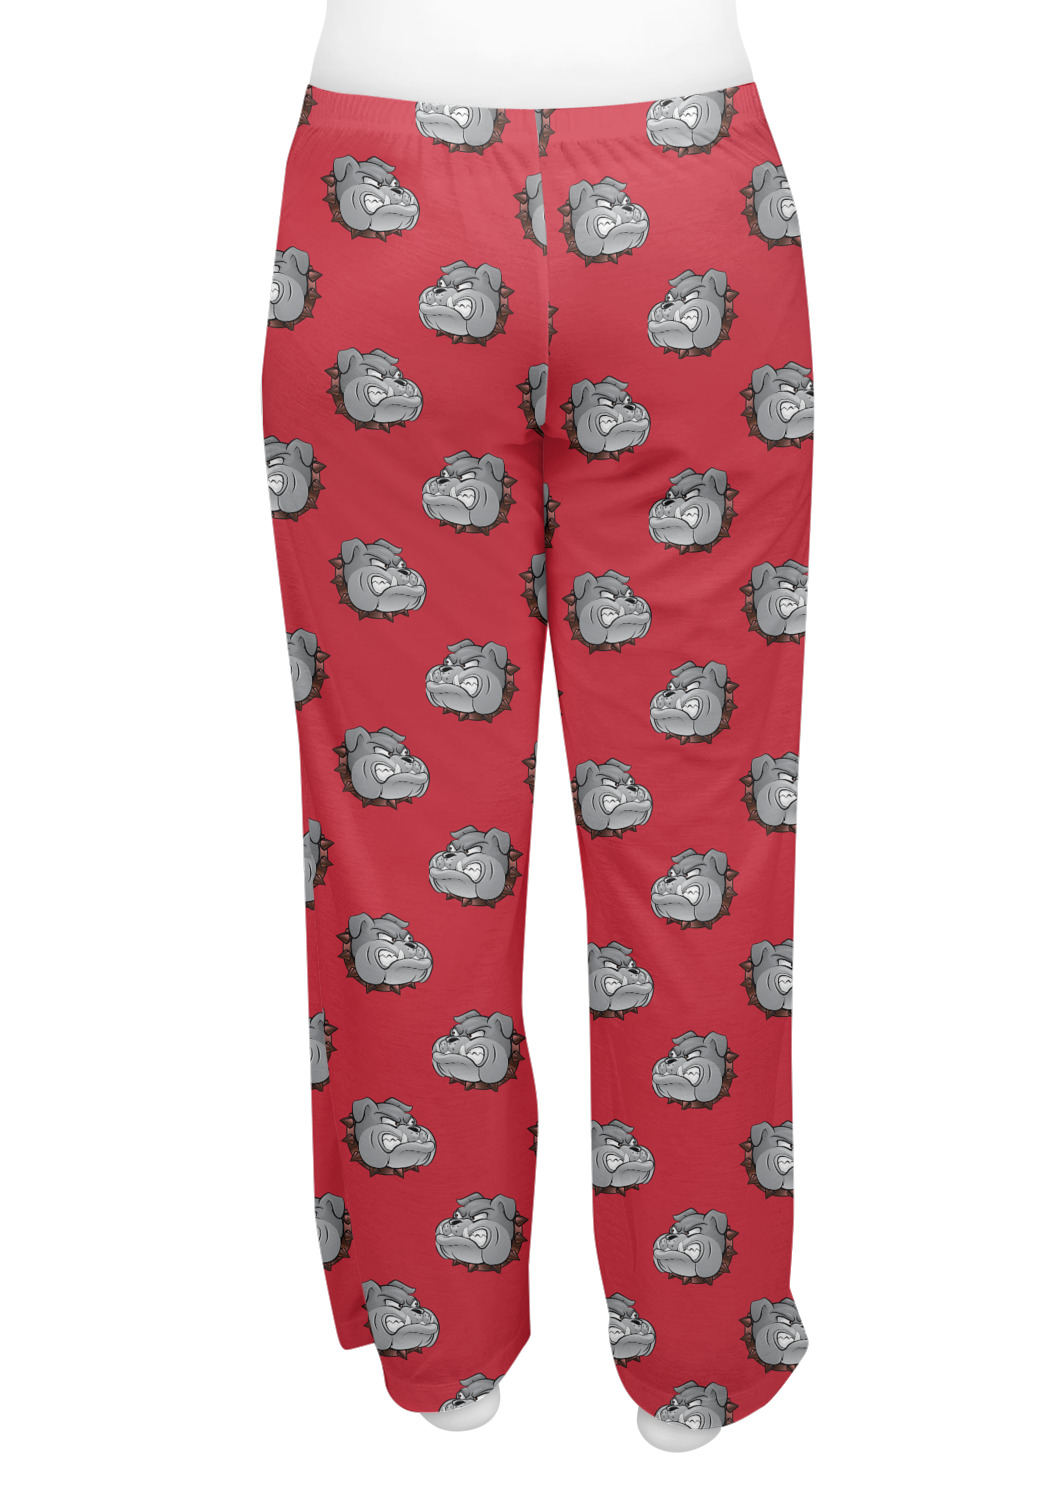 Women Pajama Pants 100% Cotton Fits Most Body Shapes Elastic Waistband  Sleepwear | eBay